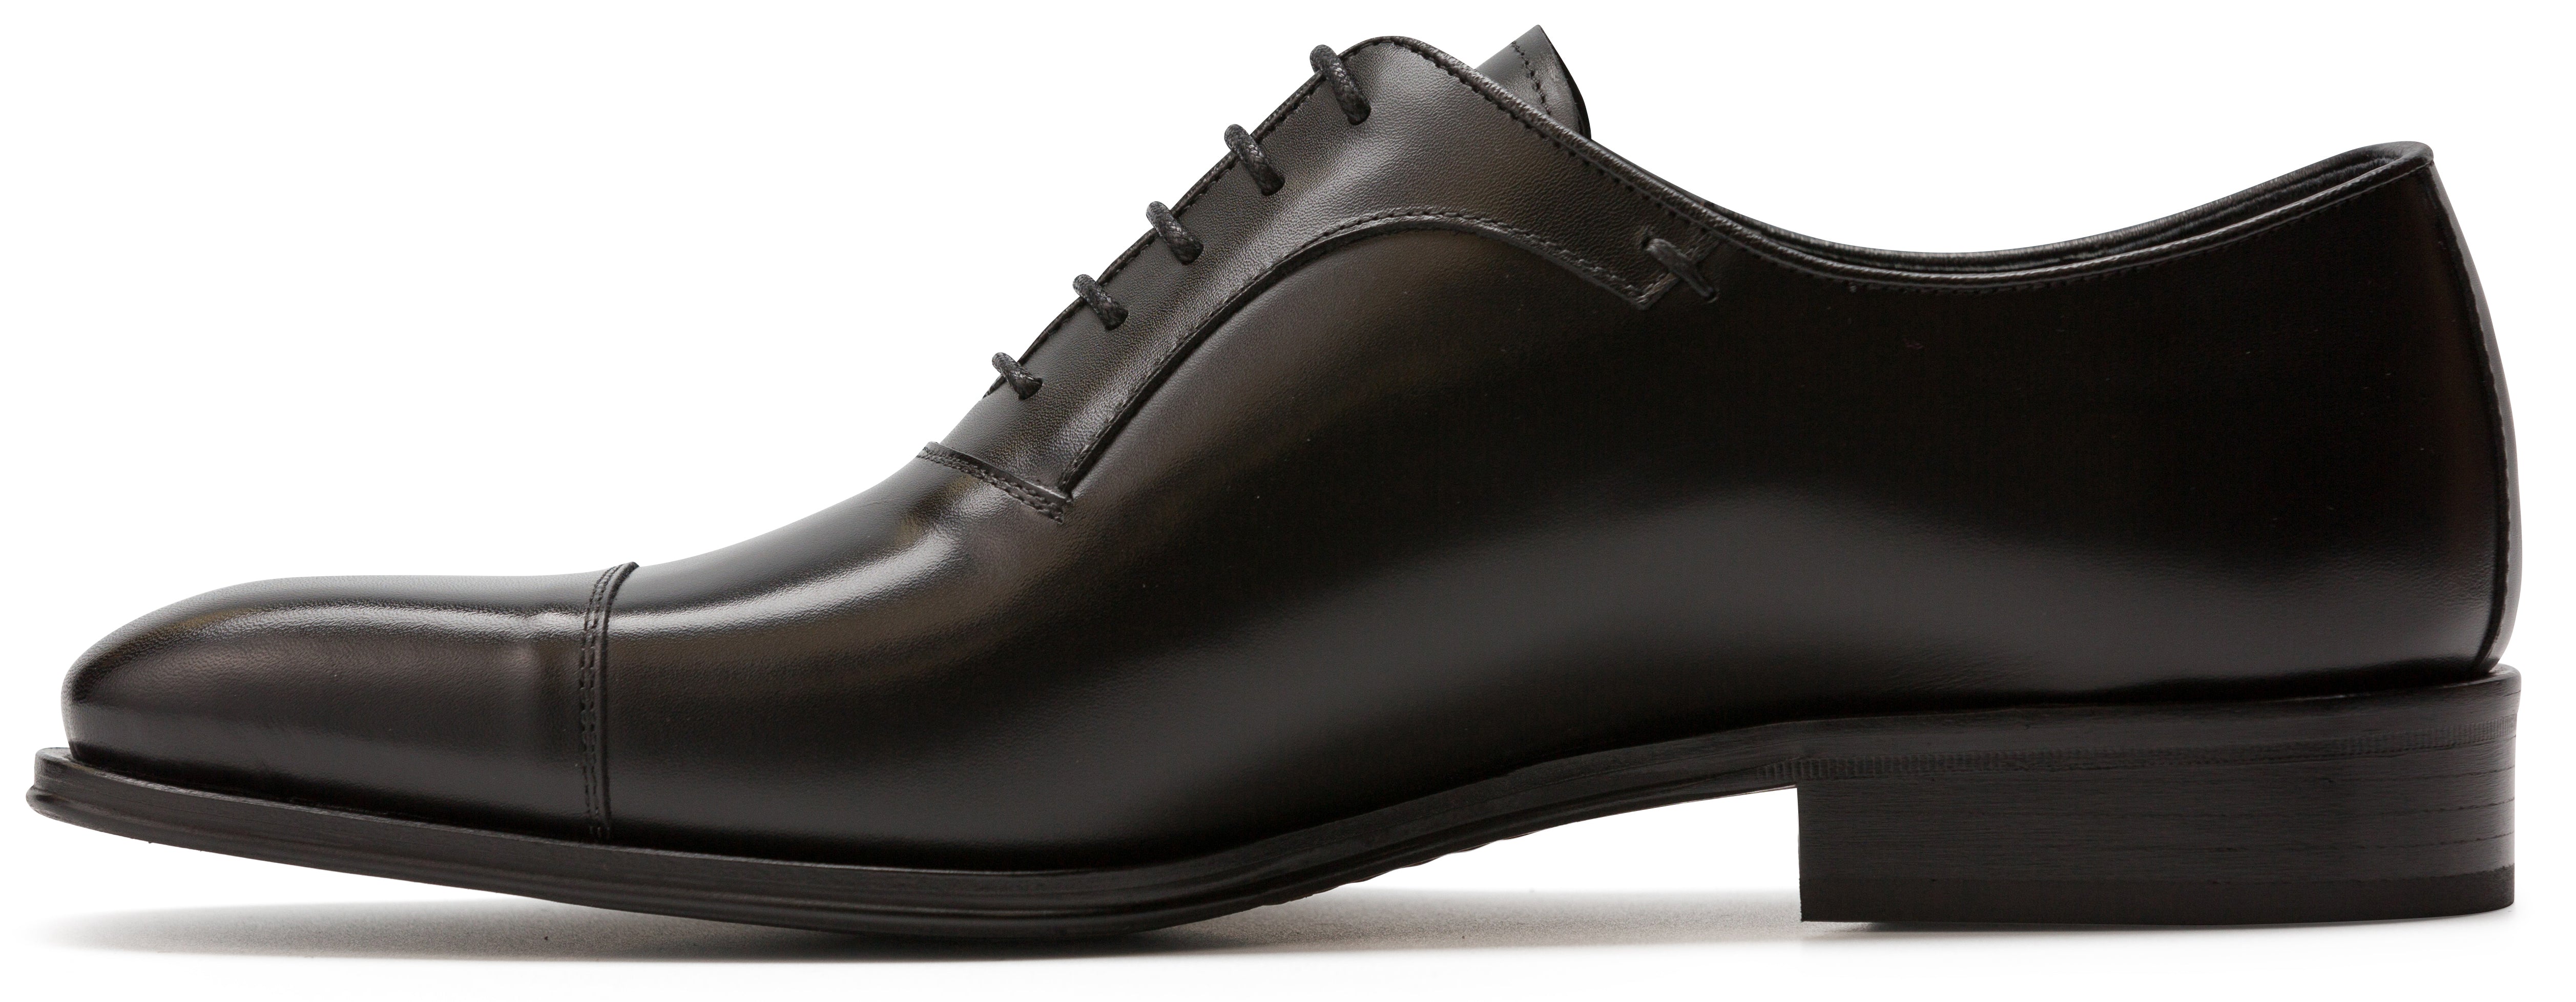 Luciana Men's Black Leather Cap toe Dress Shoe 7523